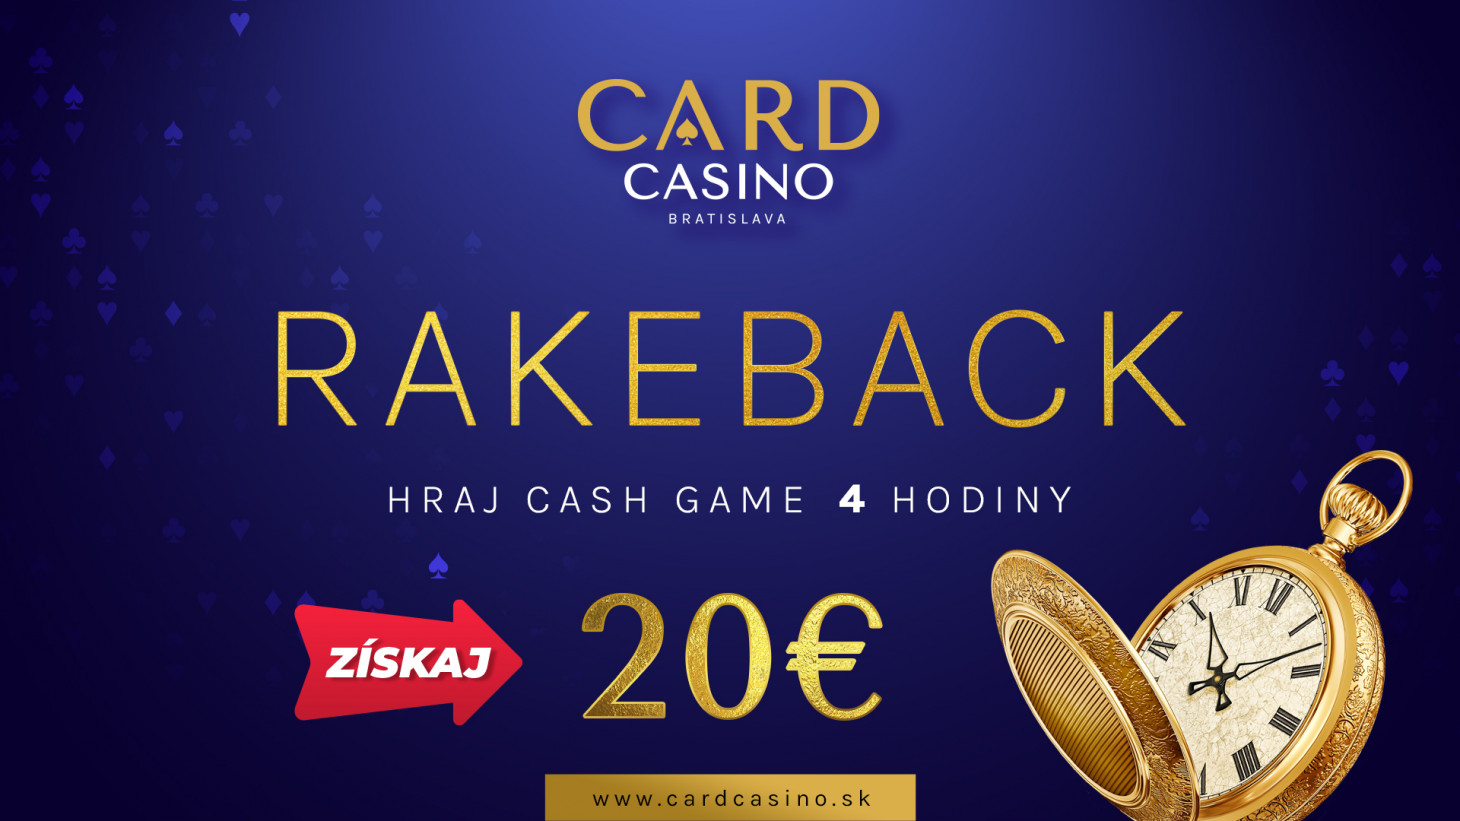 Card Casino Bratislava CASHBACK RAKEBACK